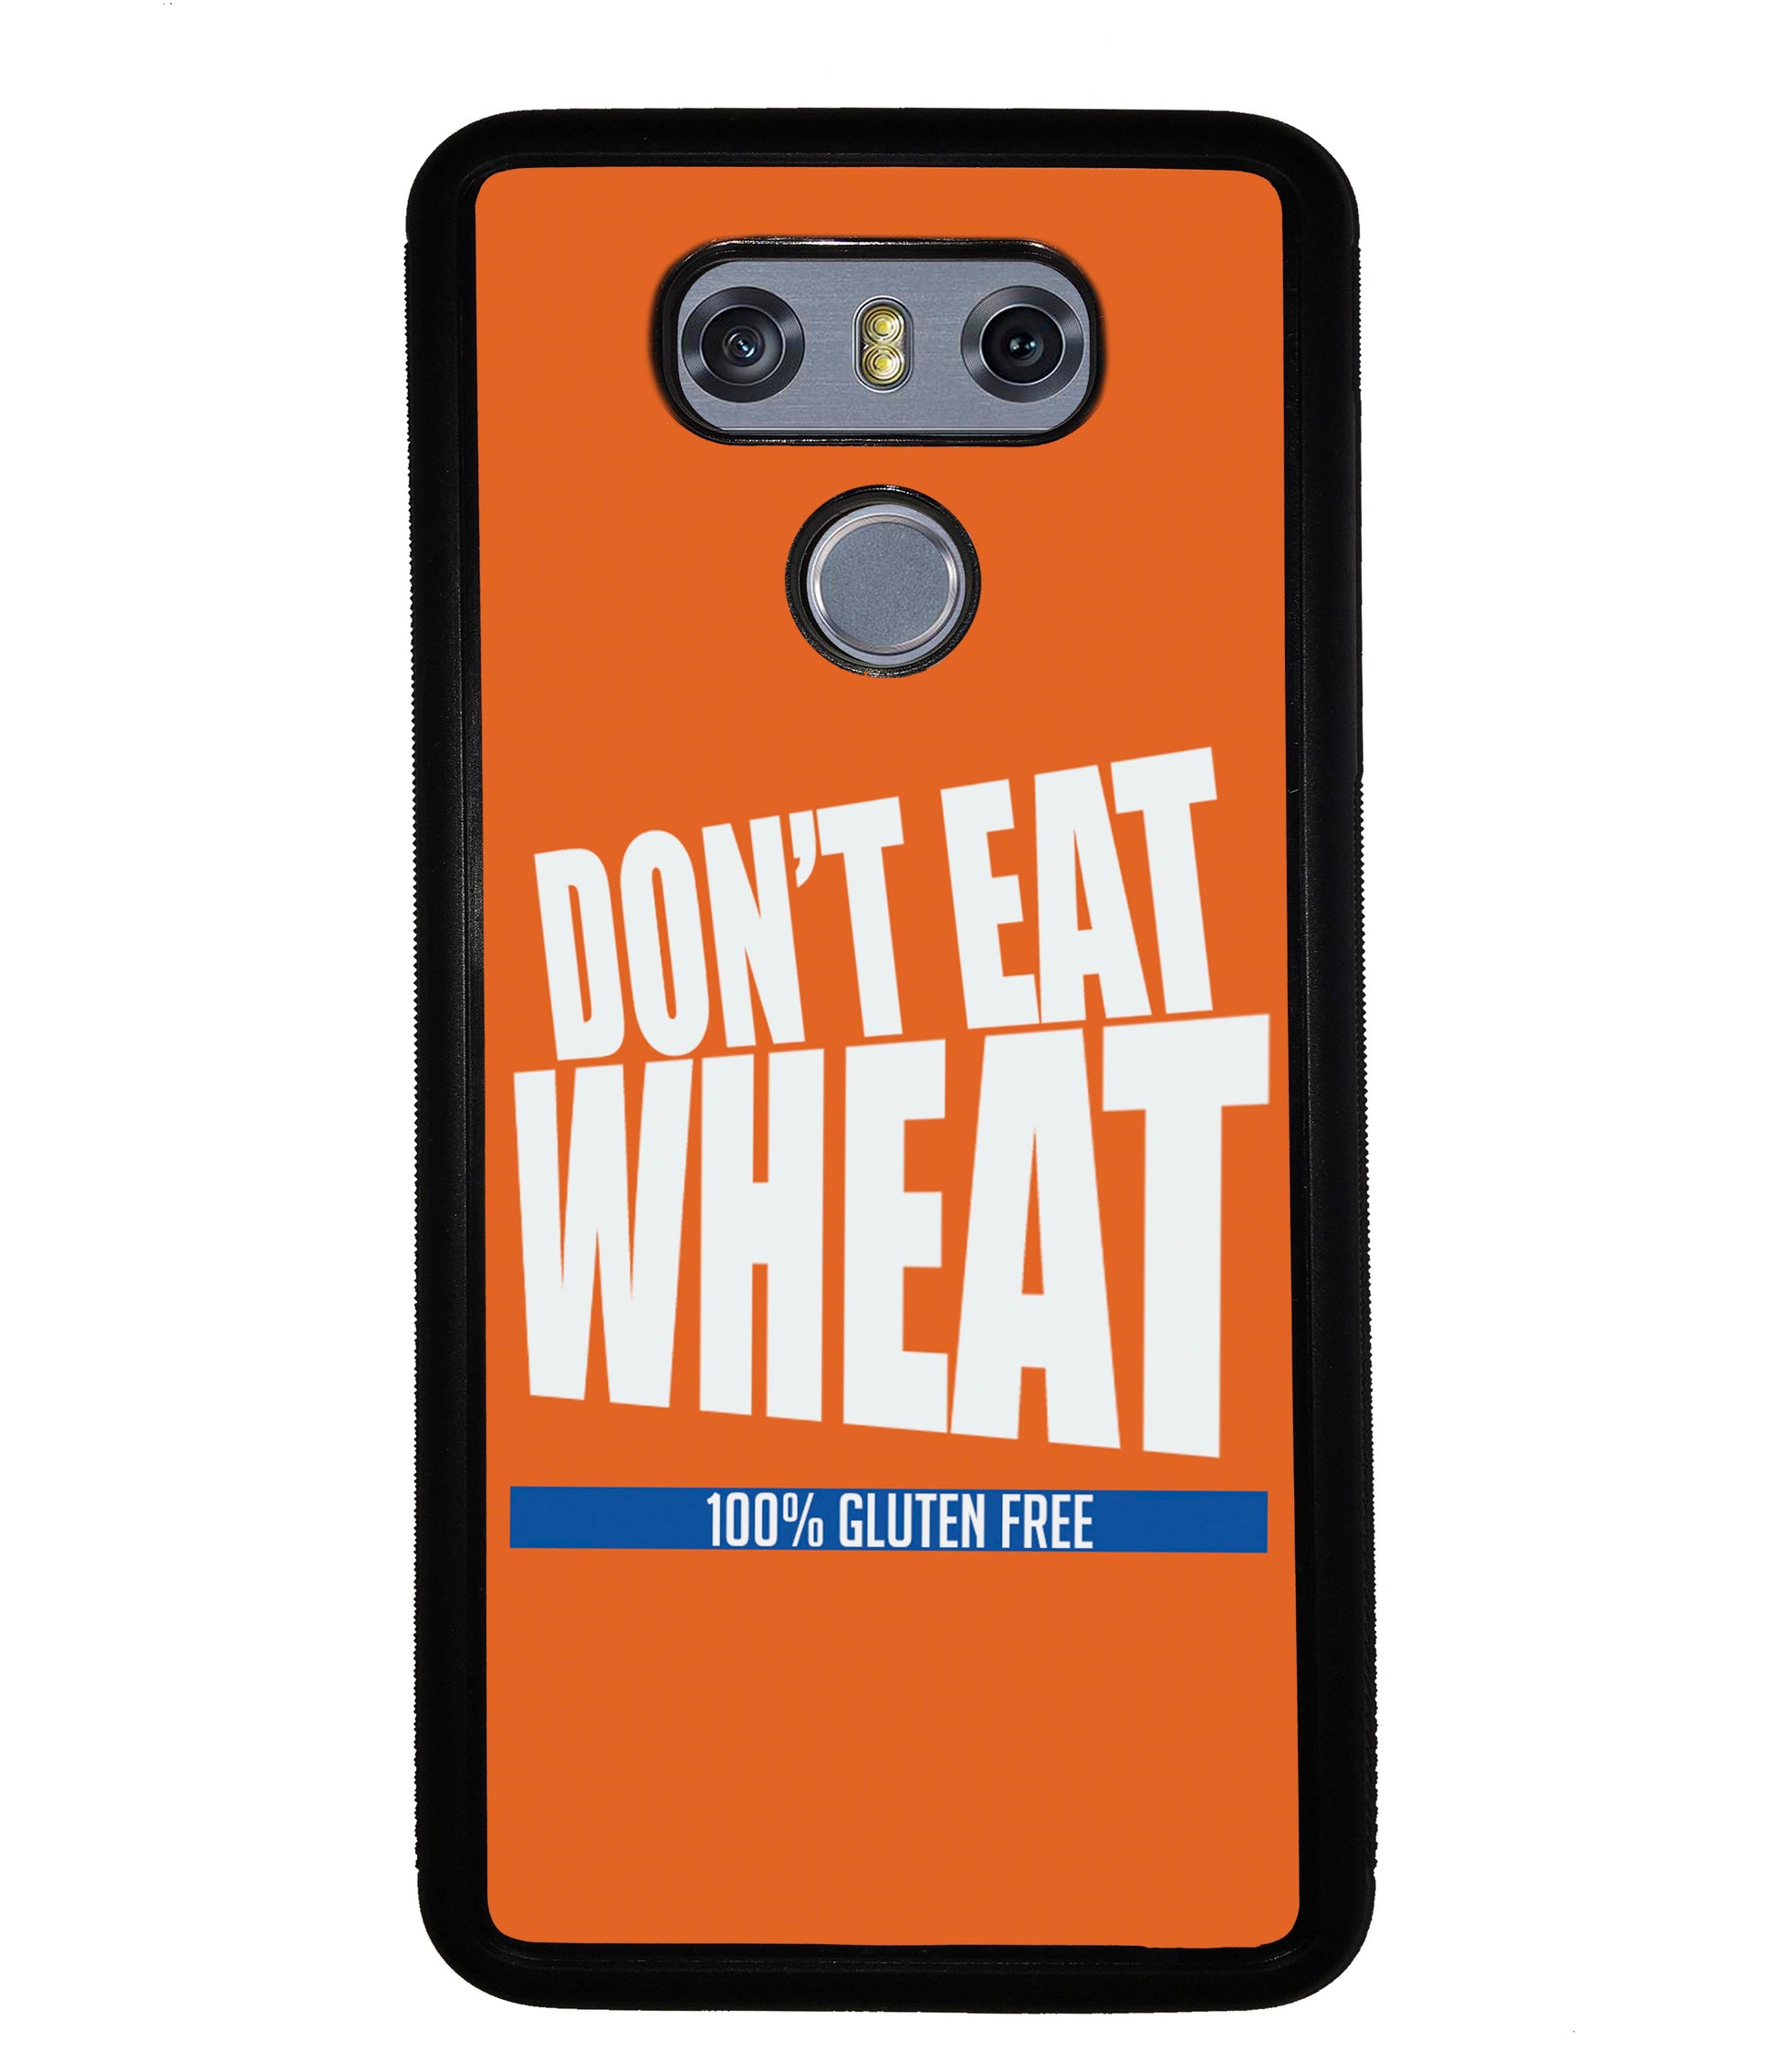 Don't Eat Wheat 100% Gluten Free | LG Phone Case